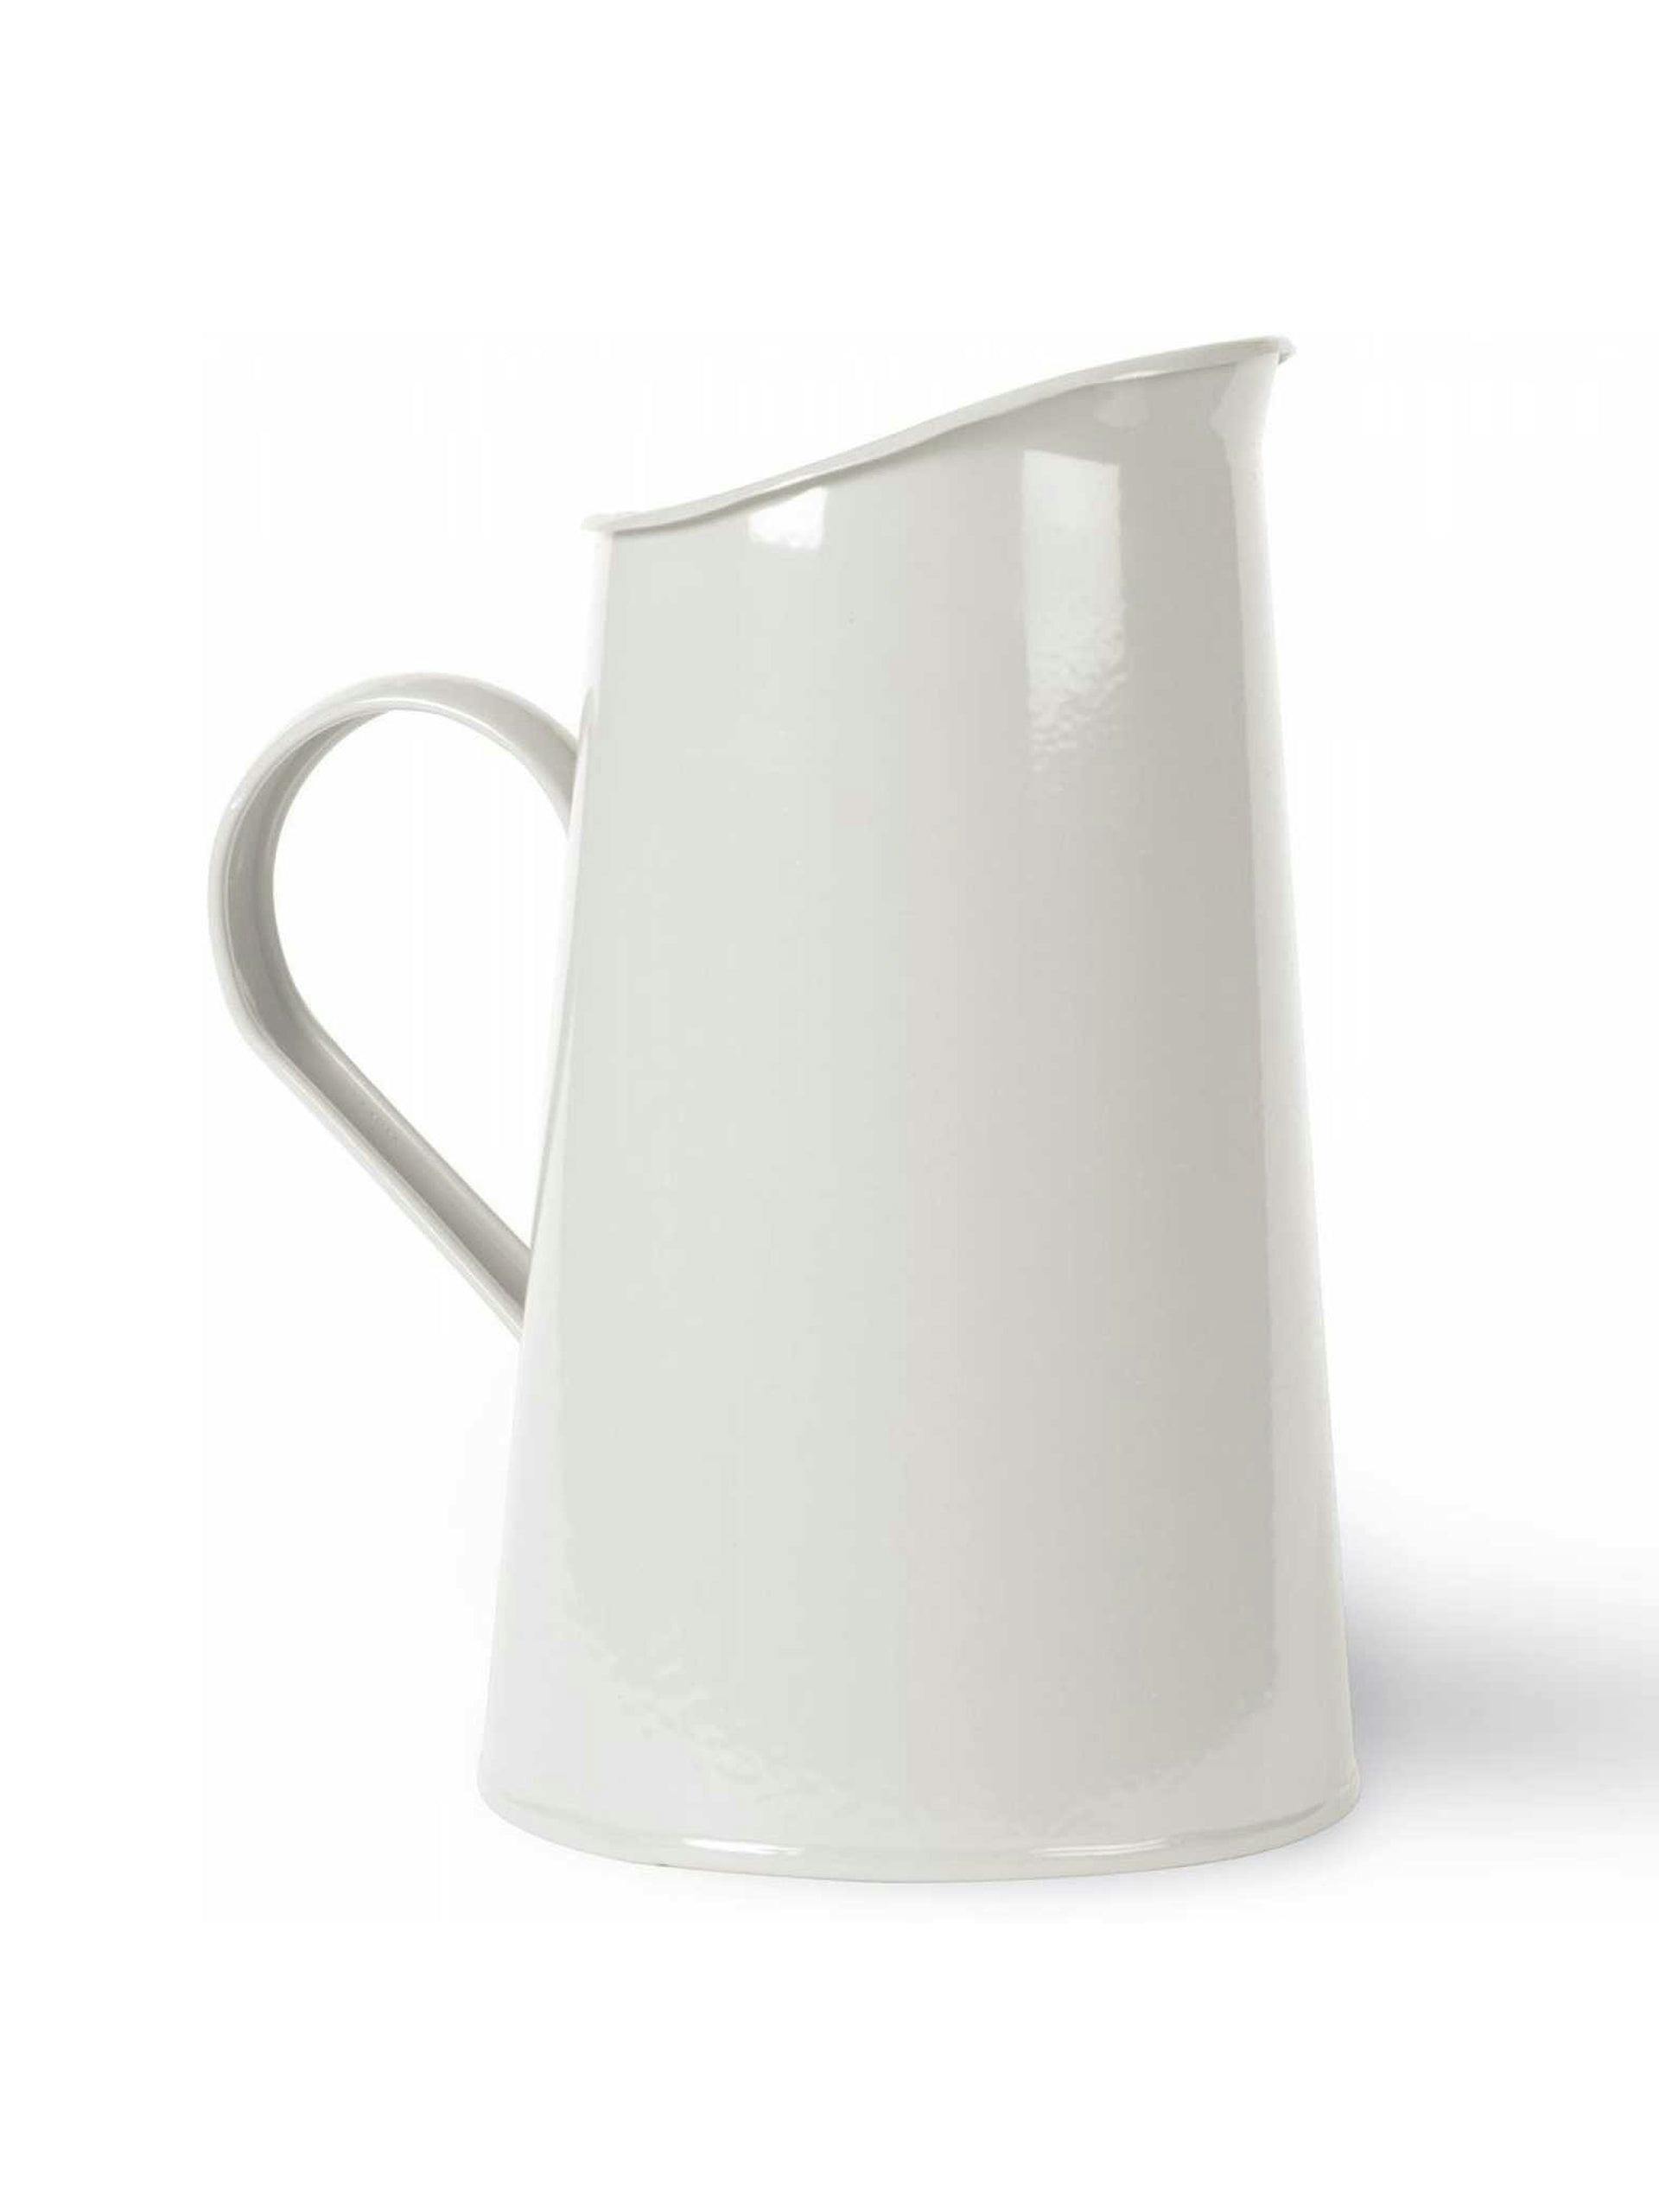 Classic coated steel jug